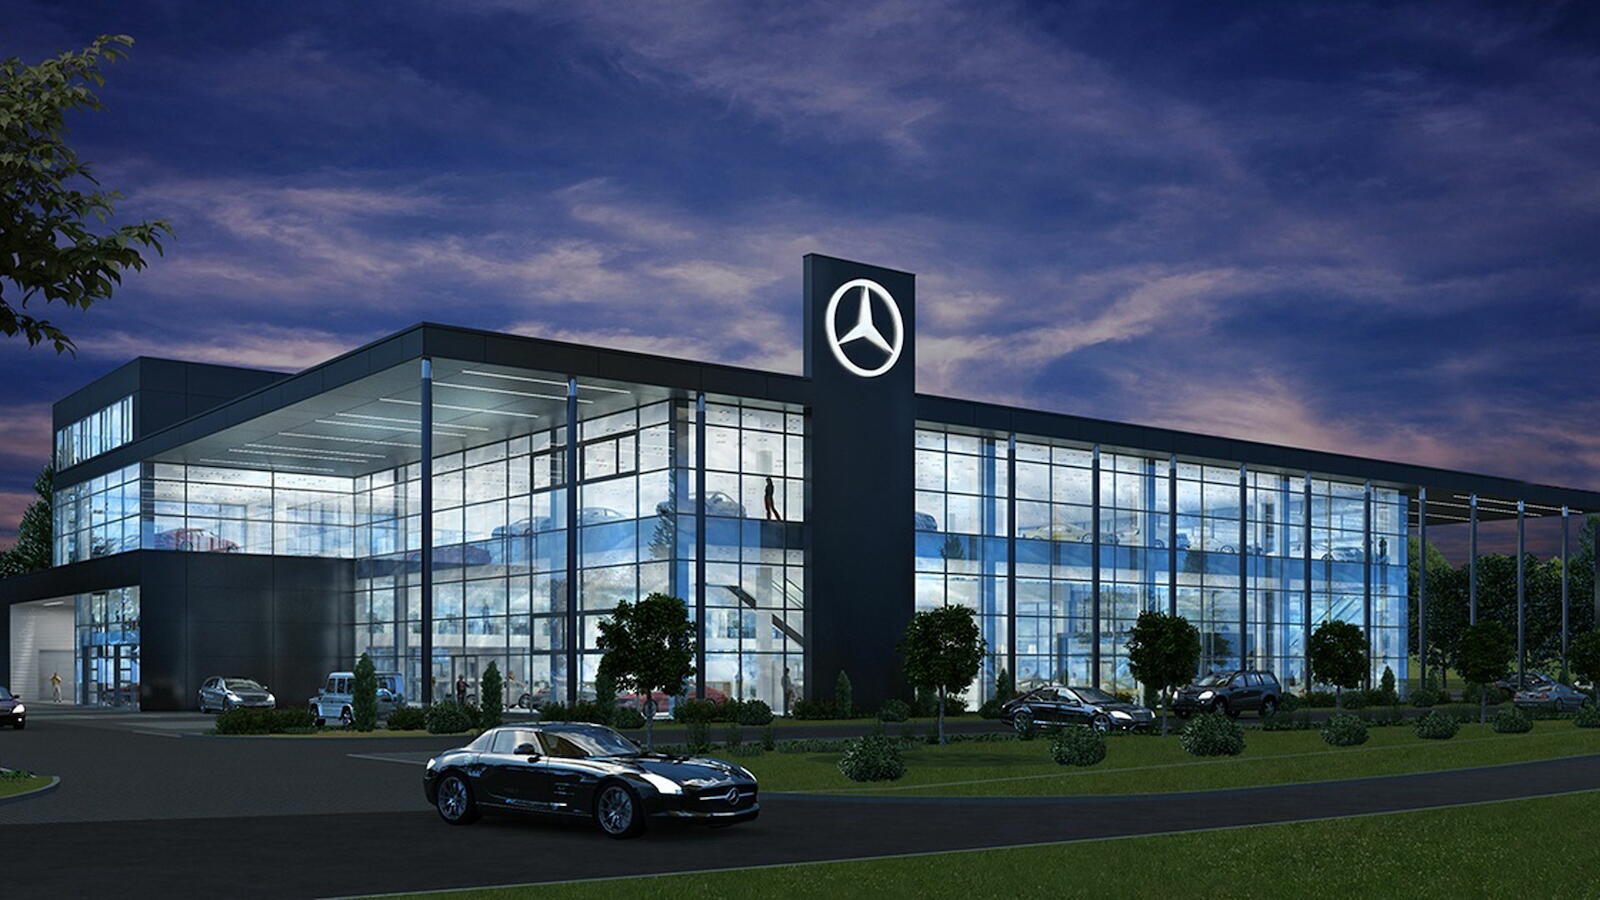 Mercedes Benz branch in Wroclaw, Poland